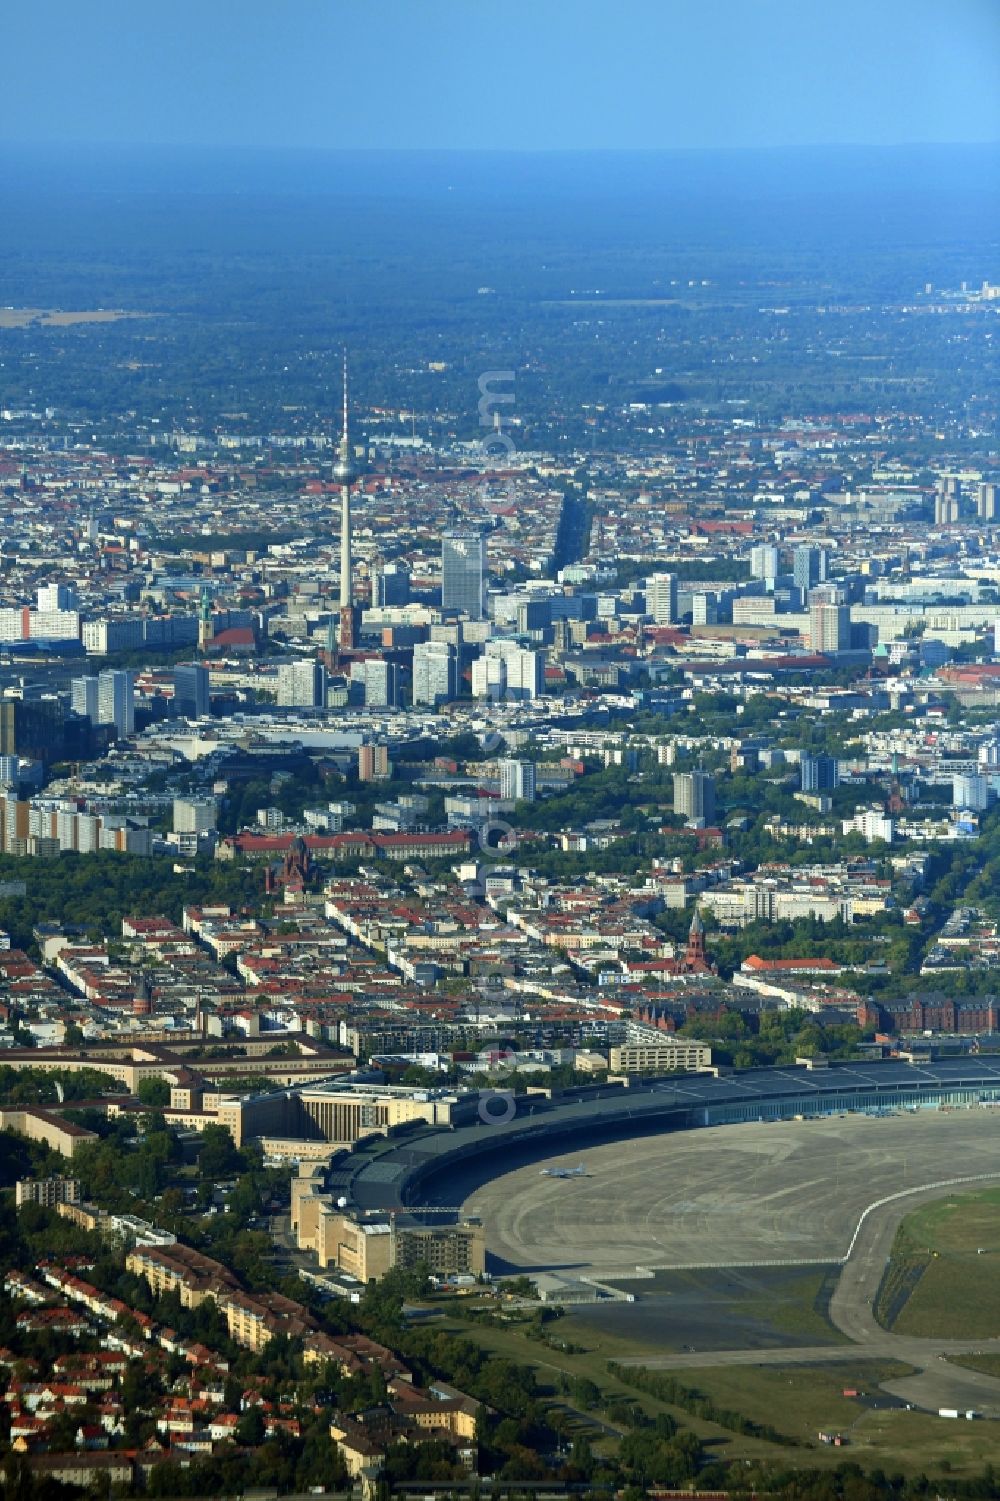 Berlin from the bird's eye view: Premises of the former airport Berlin-Tempelhof Tempelhofer Freiheit in the Tempelhof part of Berlin, Germany